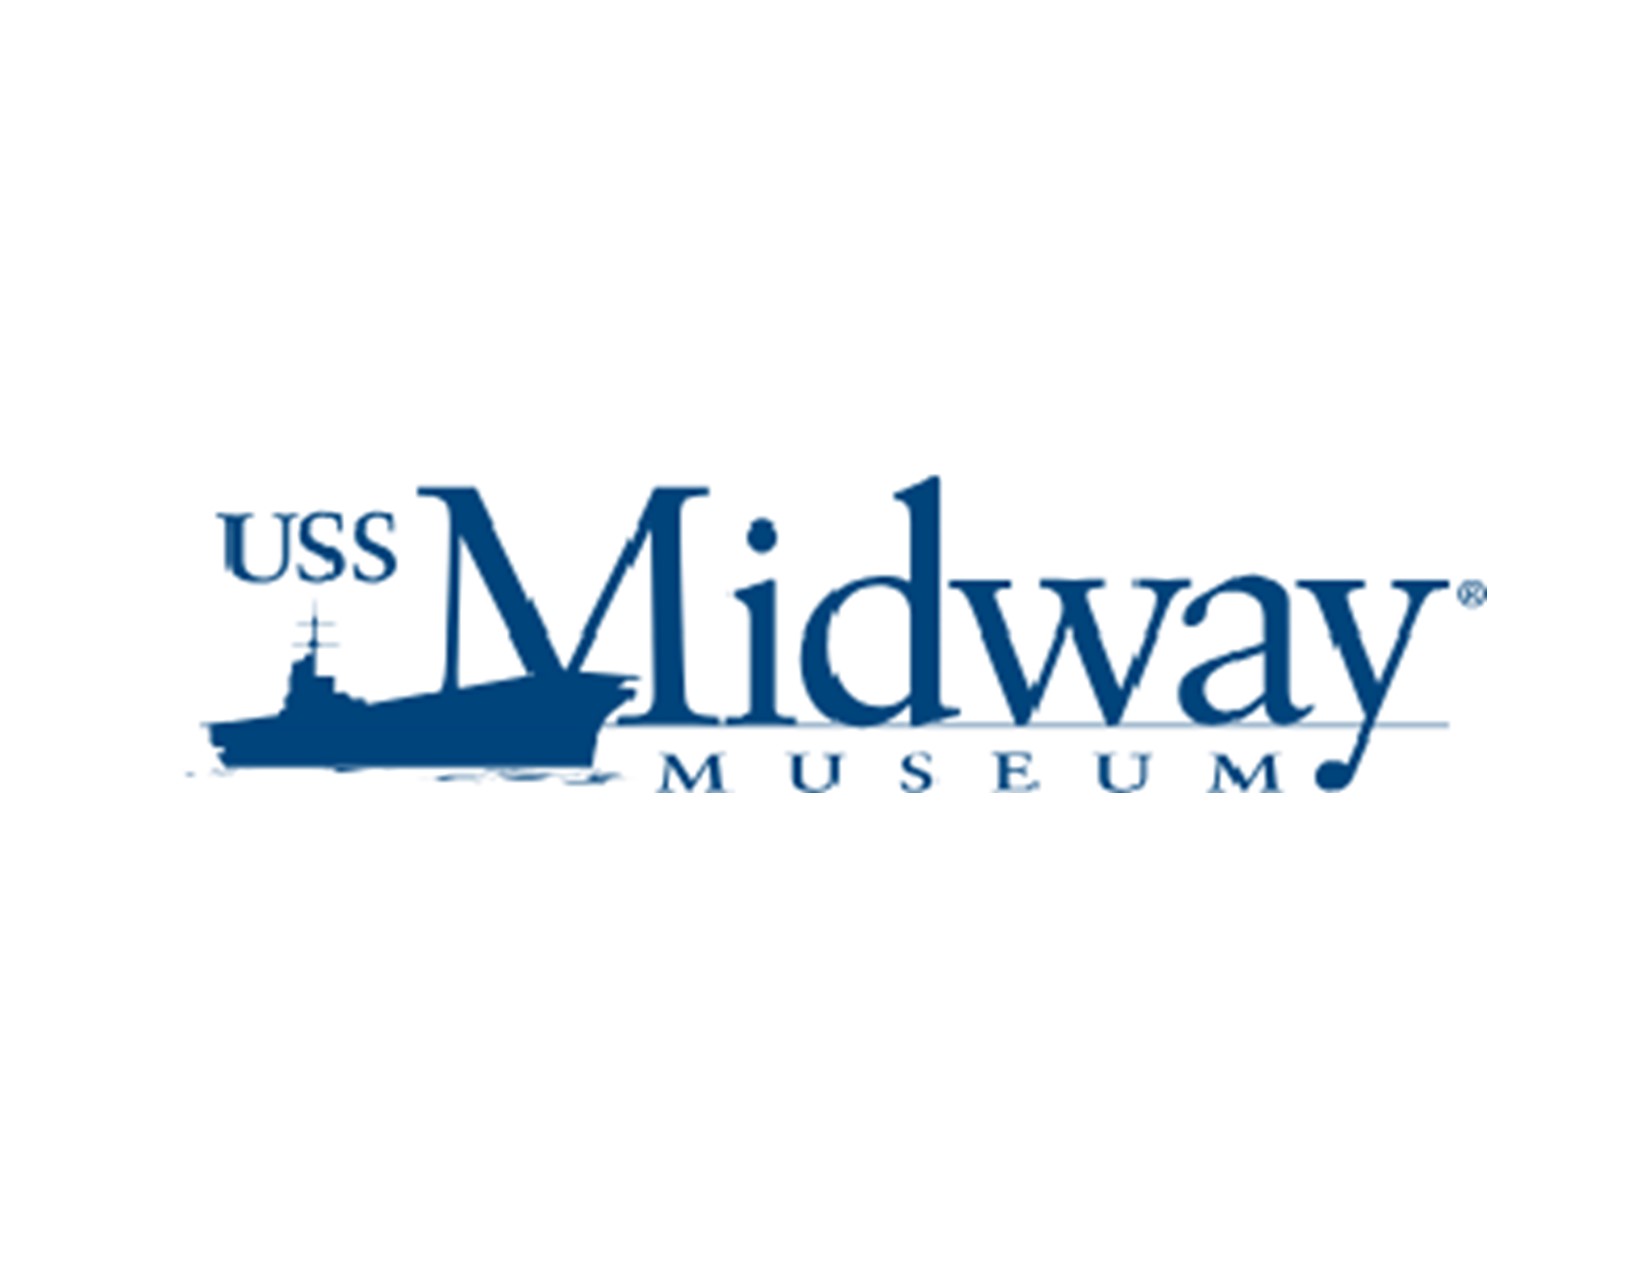 USS Midway logo